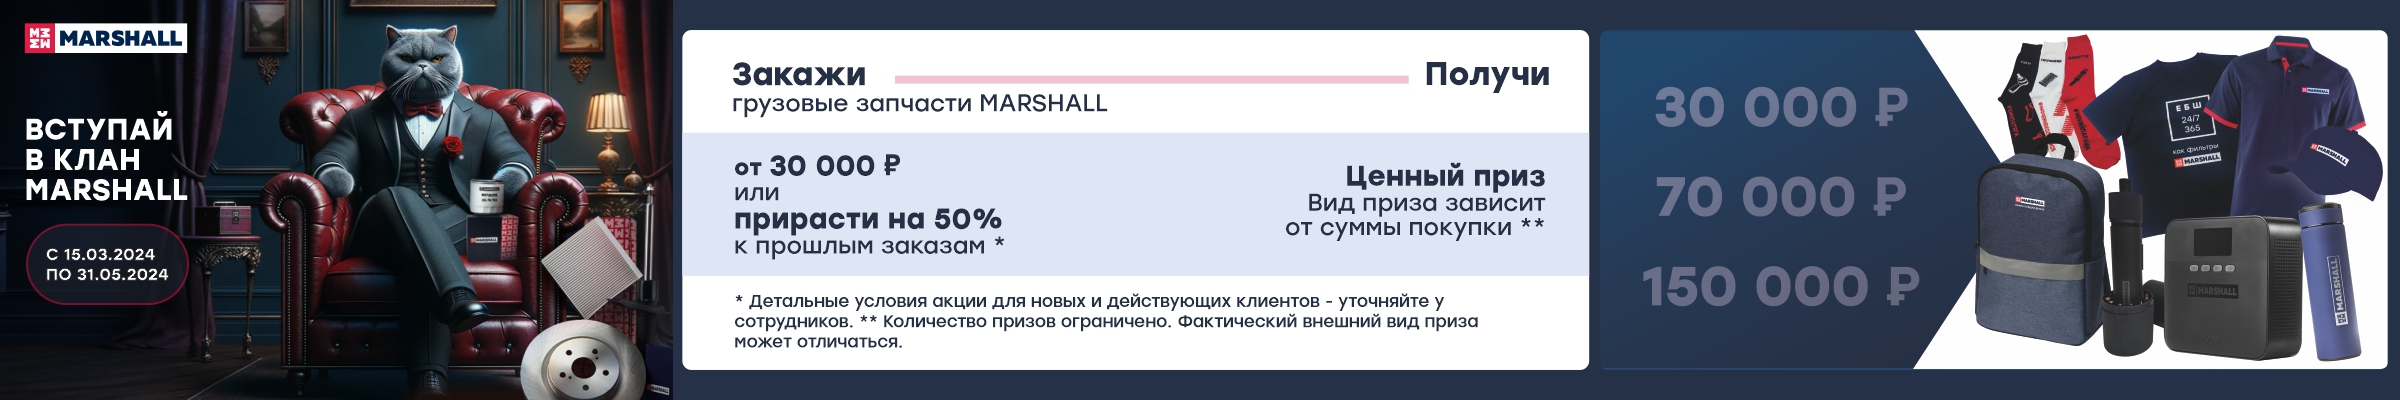 MARSHALL на scannum.ru